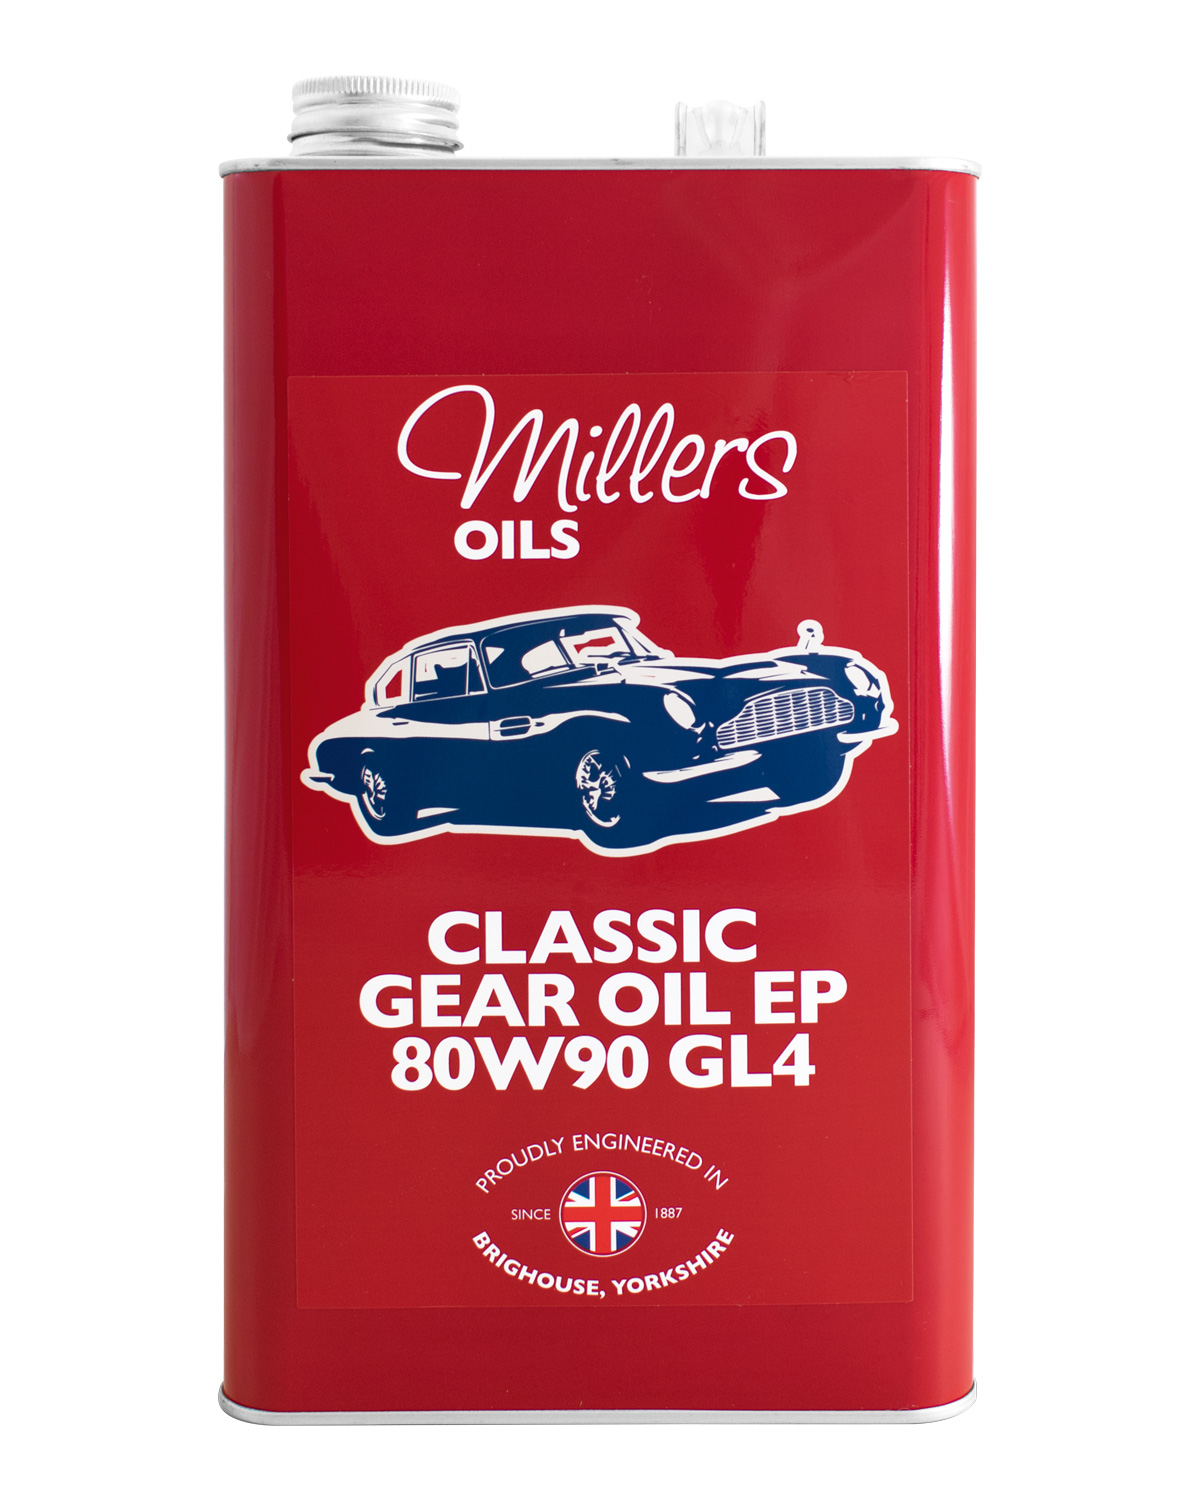 Millers Oils Classic Gear Oil EP 80W90 GL4, 5 Liter